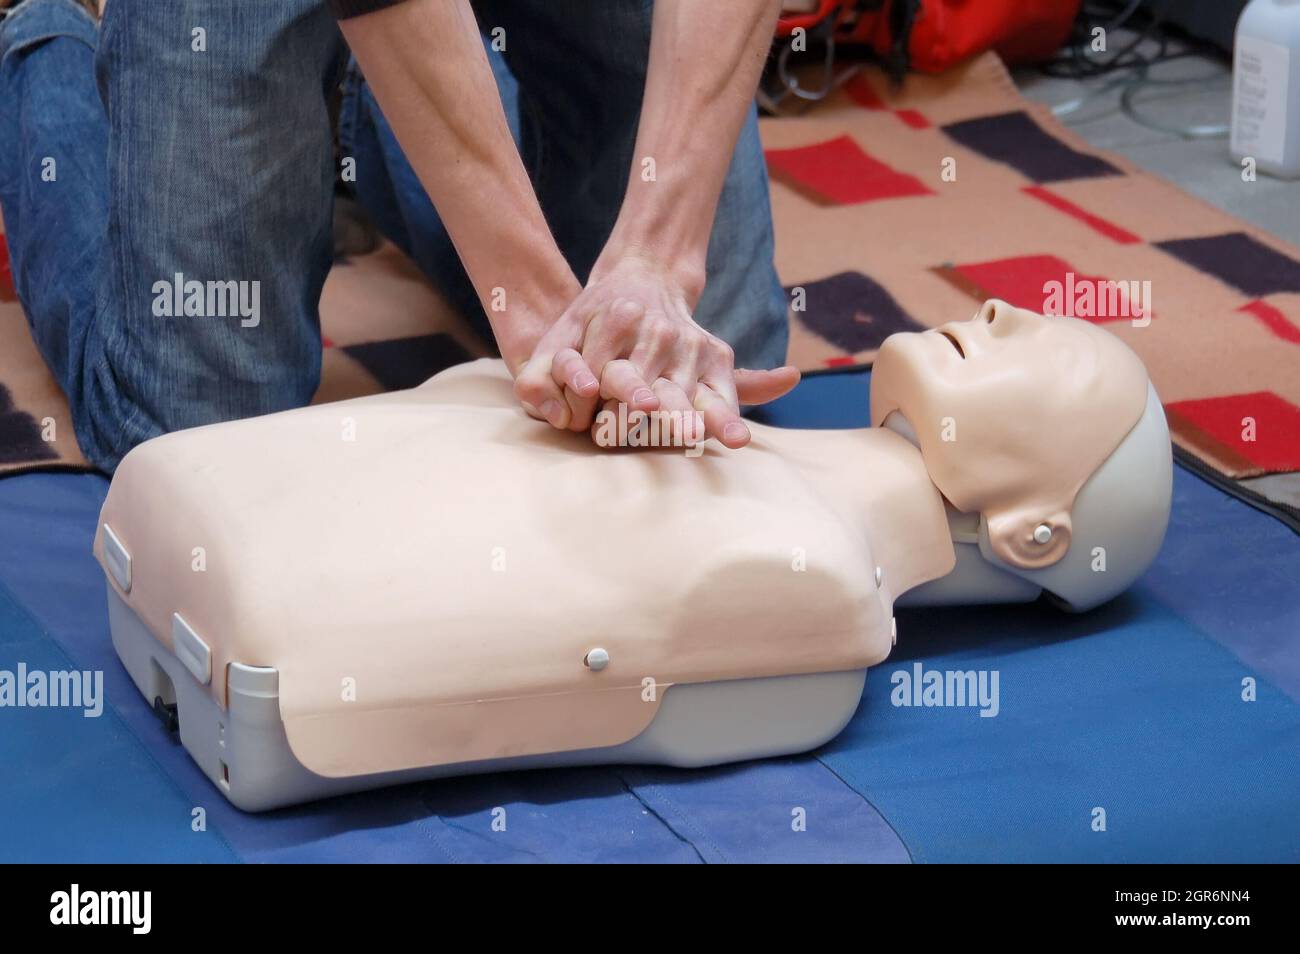 Resustitation Training Using First-aid Dummy Stock Photo